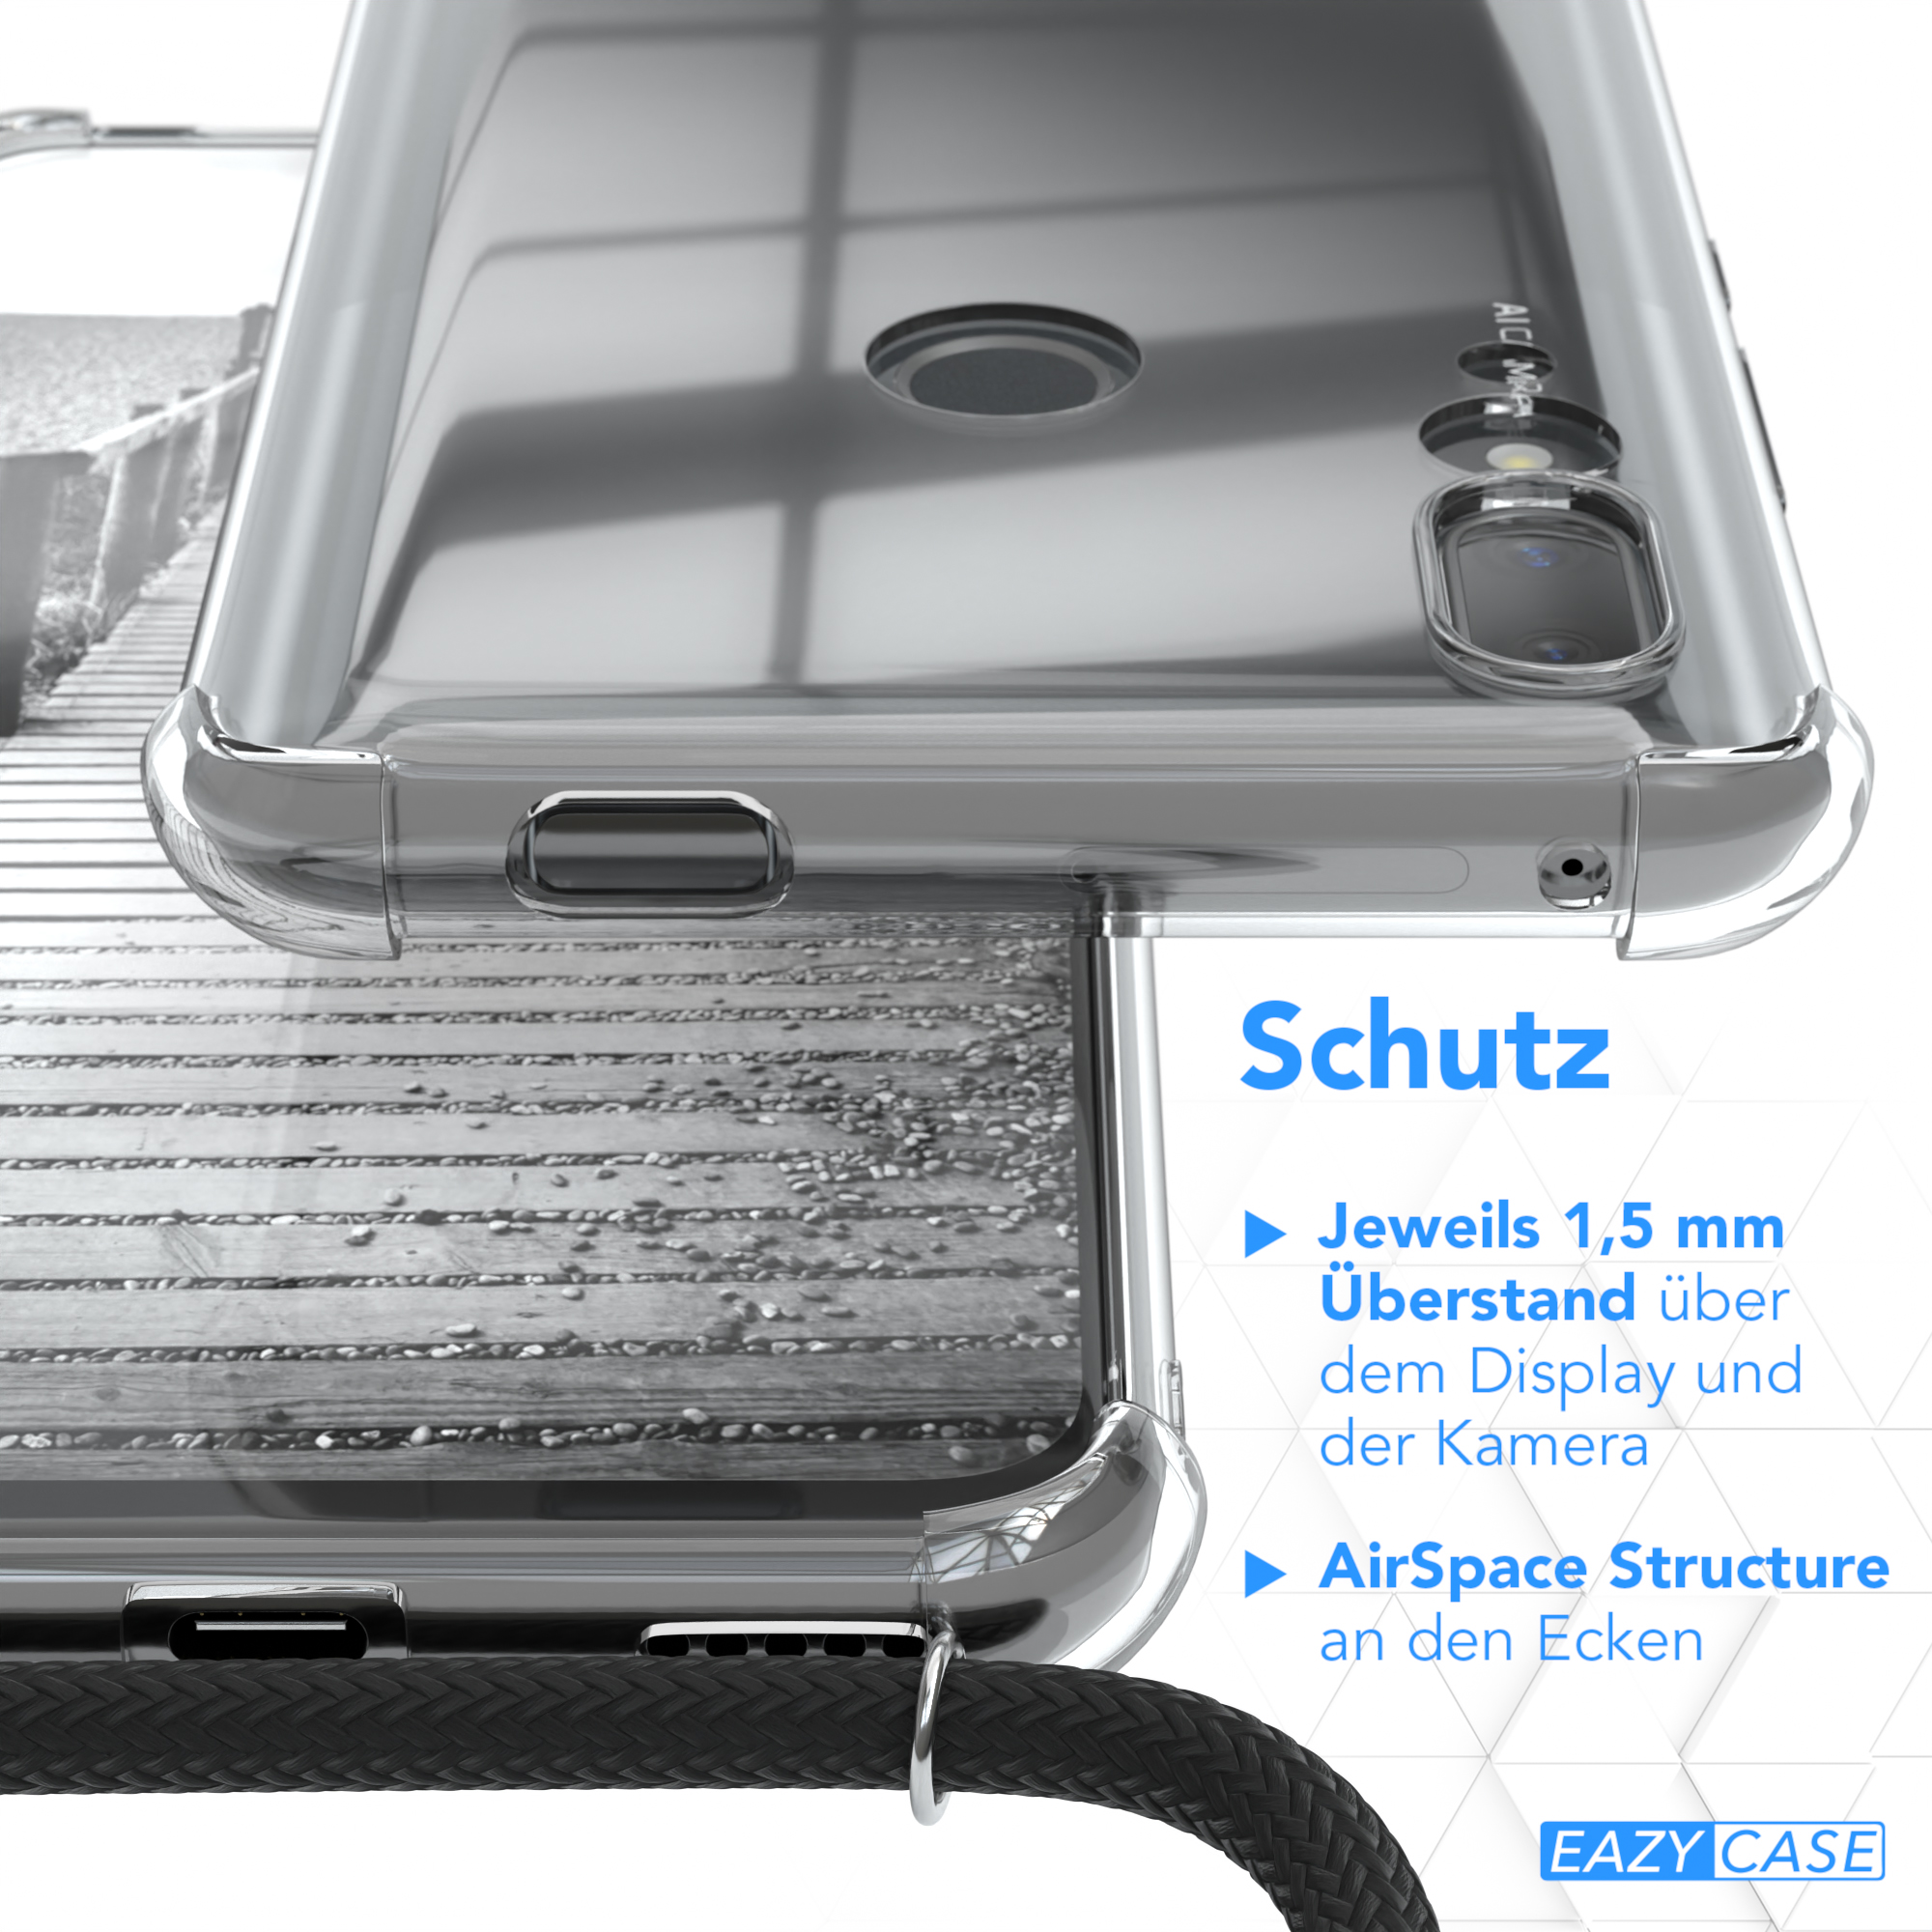 CASE Huawei, P Schwarz, Z Smart / Y9 Kordel Prime Metall Umhängetasche, EAZY extra Handykette (2019), + Silber